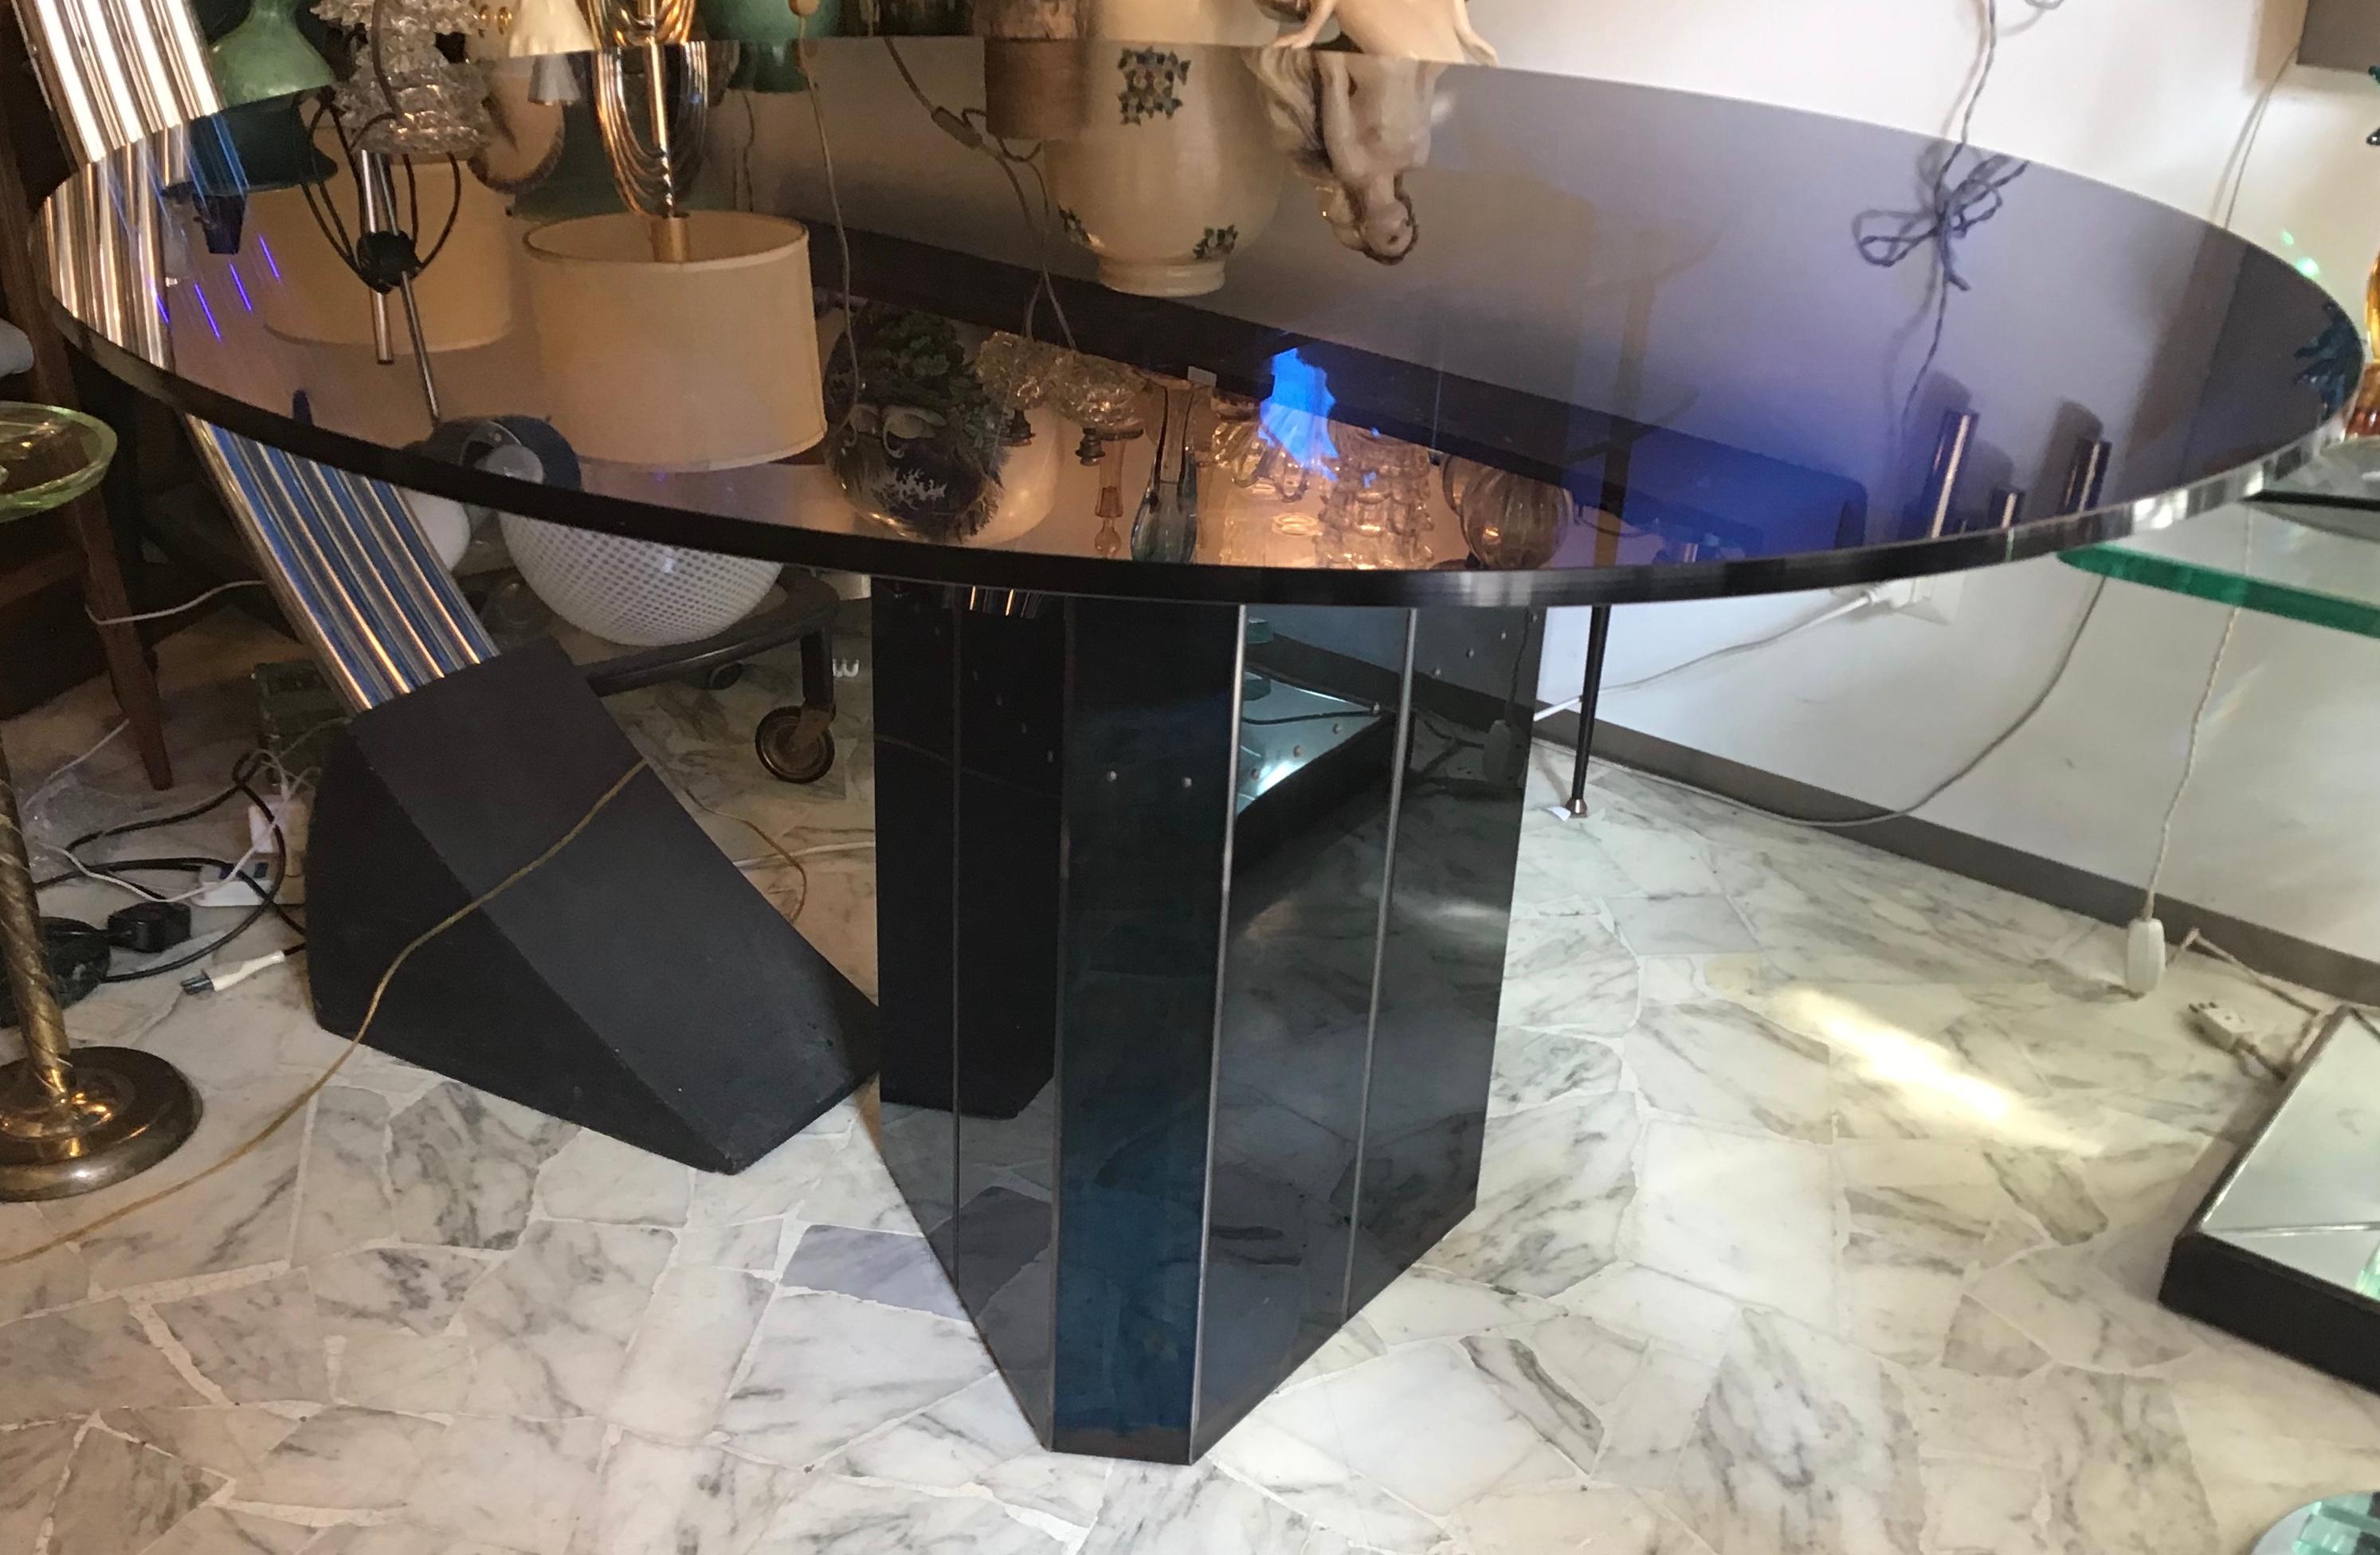 Afra e Tobia Scarpa “Polygono” table metal glass by B&B, 1980, Italy.